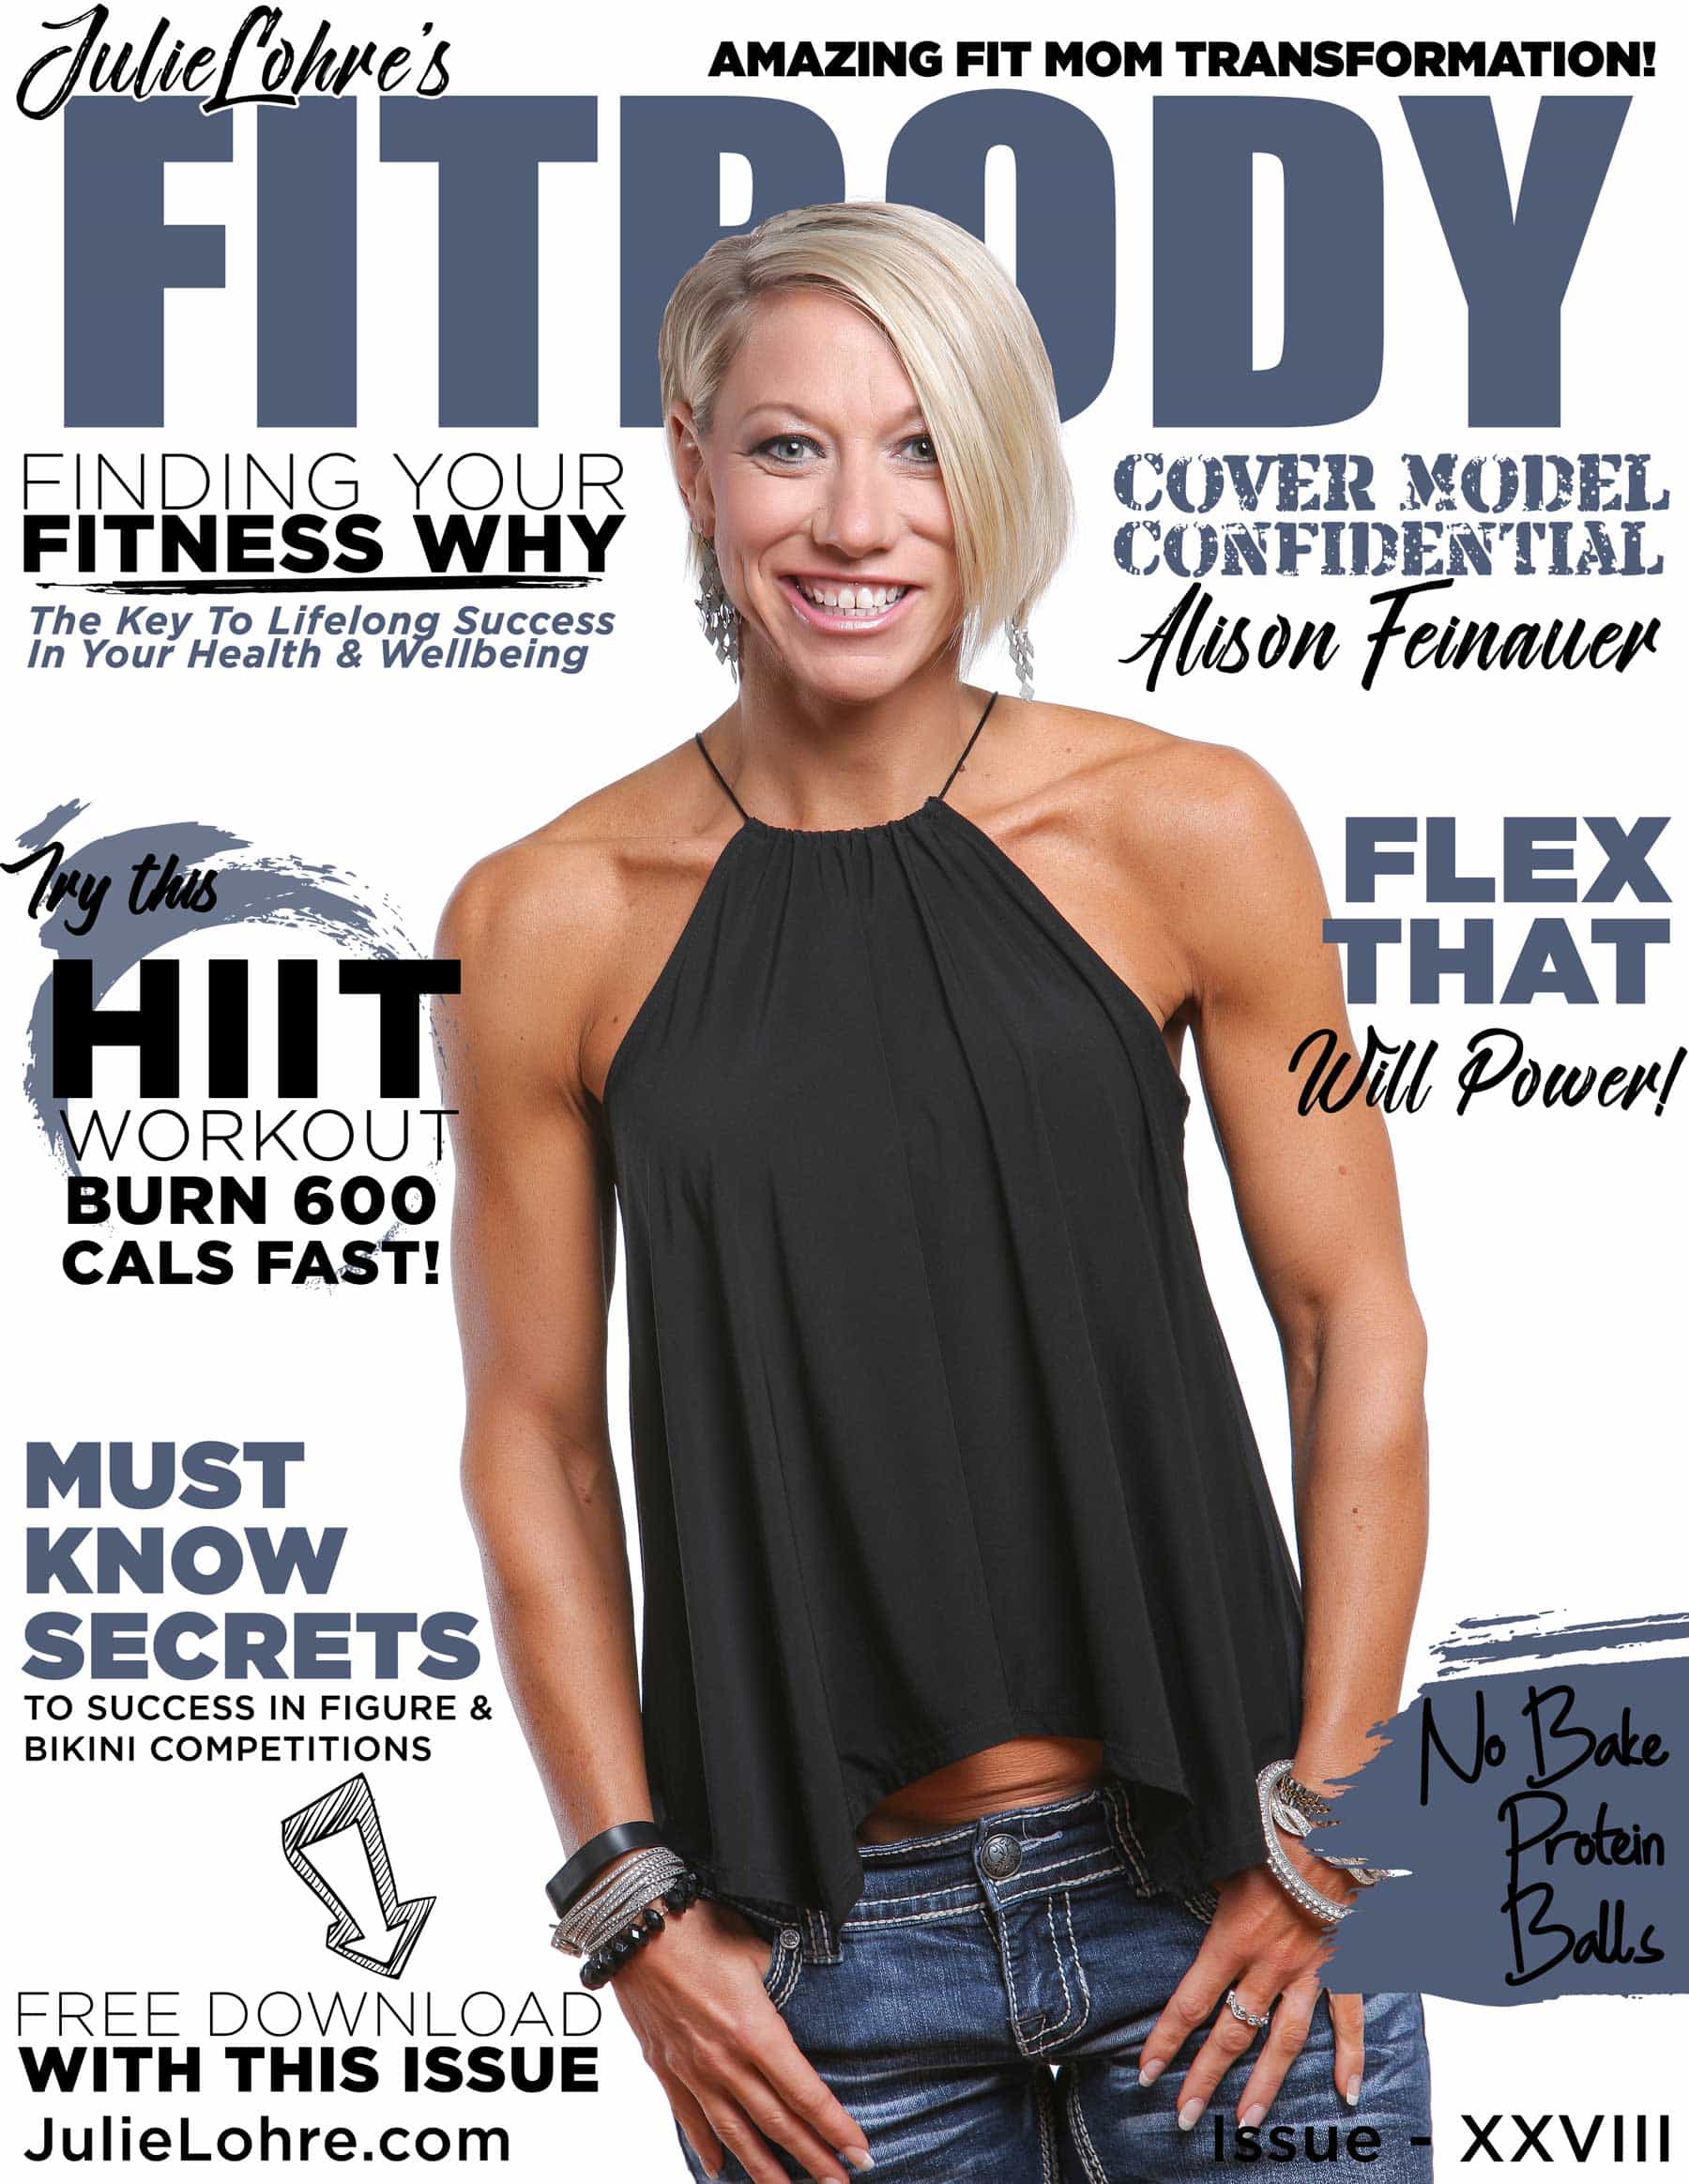 Fitbody Magazine